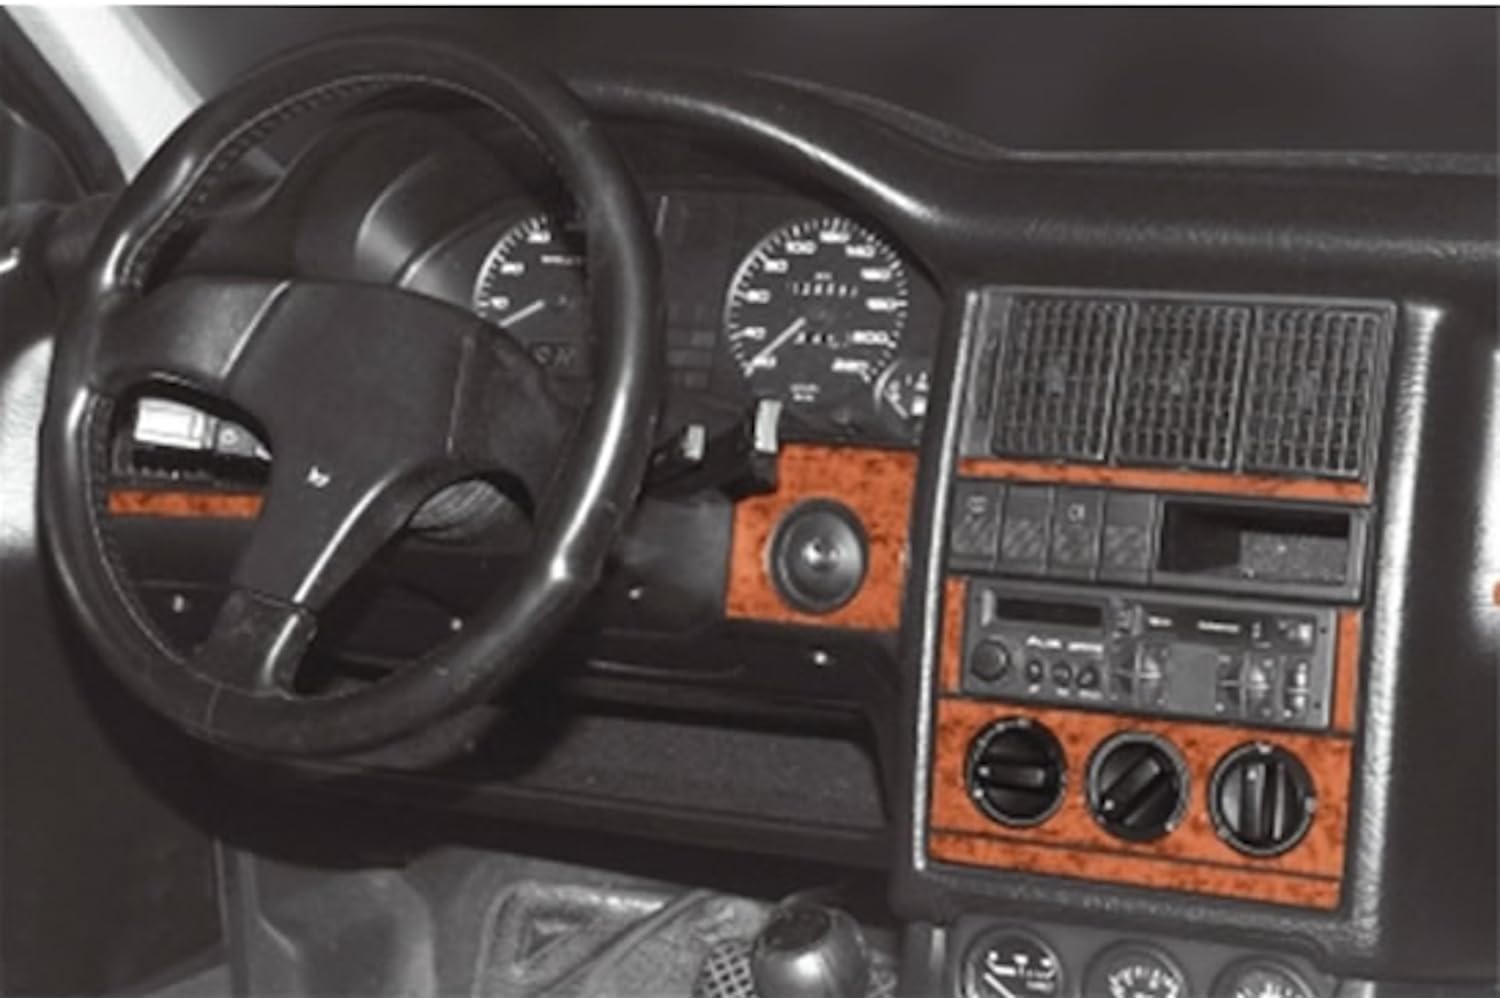 AUTOKLEIDUNG® Cockpit Dekor kompatibel mit Audi 80/90 (B4) Baujahr 10/1986-01/1995 11 Teile | 3D Wurzelholz Optik von Autokleidung